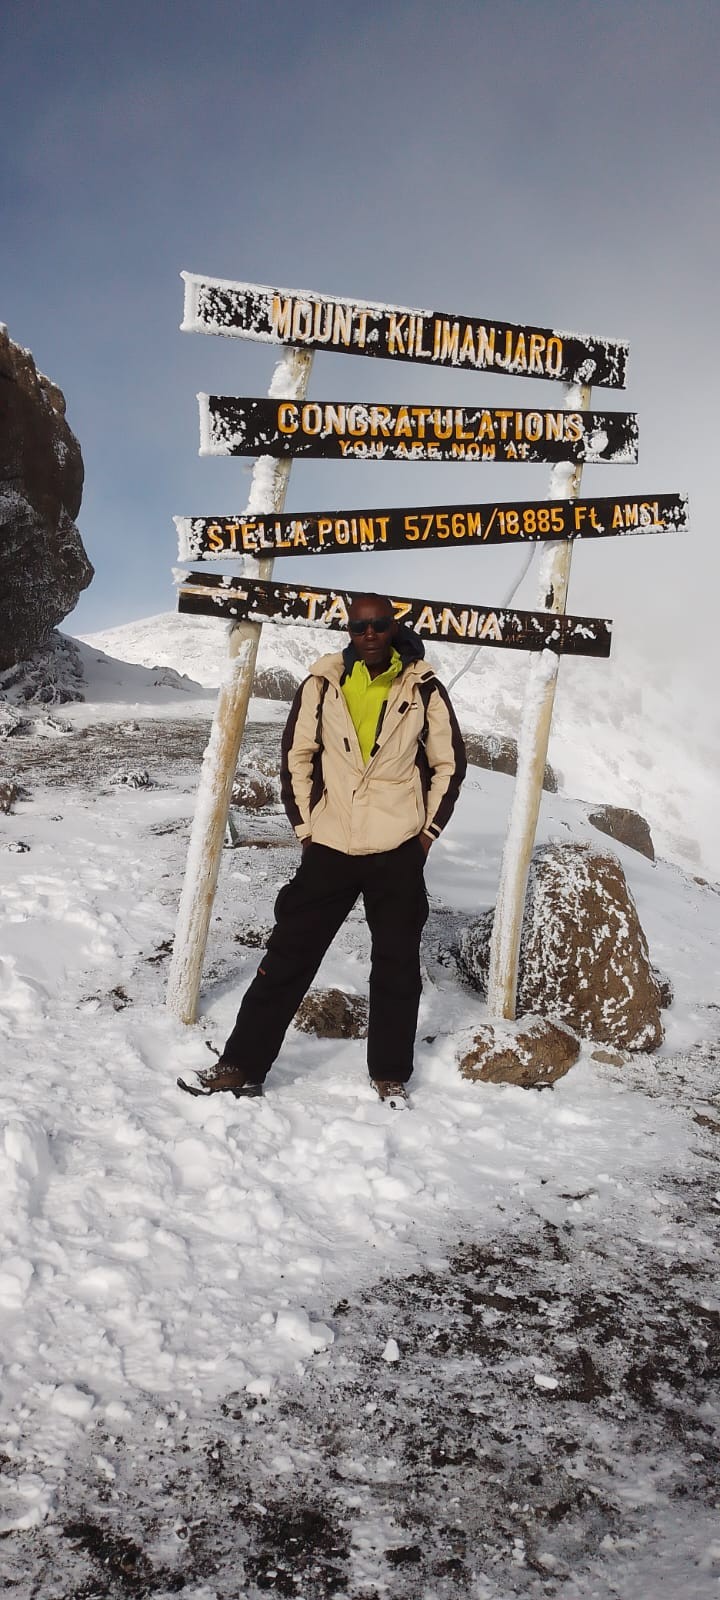 Climbing mount kilimanjaro trekking hiking active adventures epic tours safaris yha kenya travel mountain adventures tanzania tours 6 